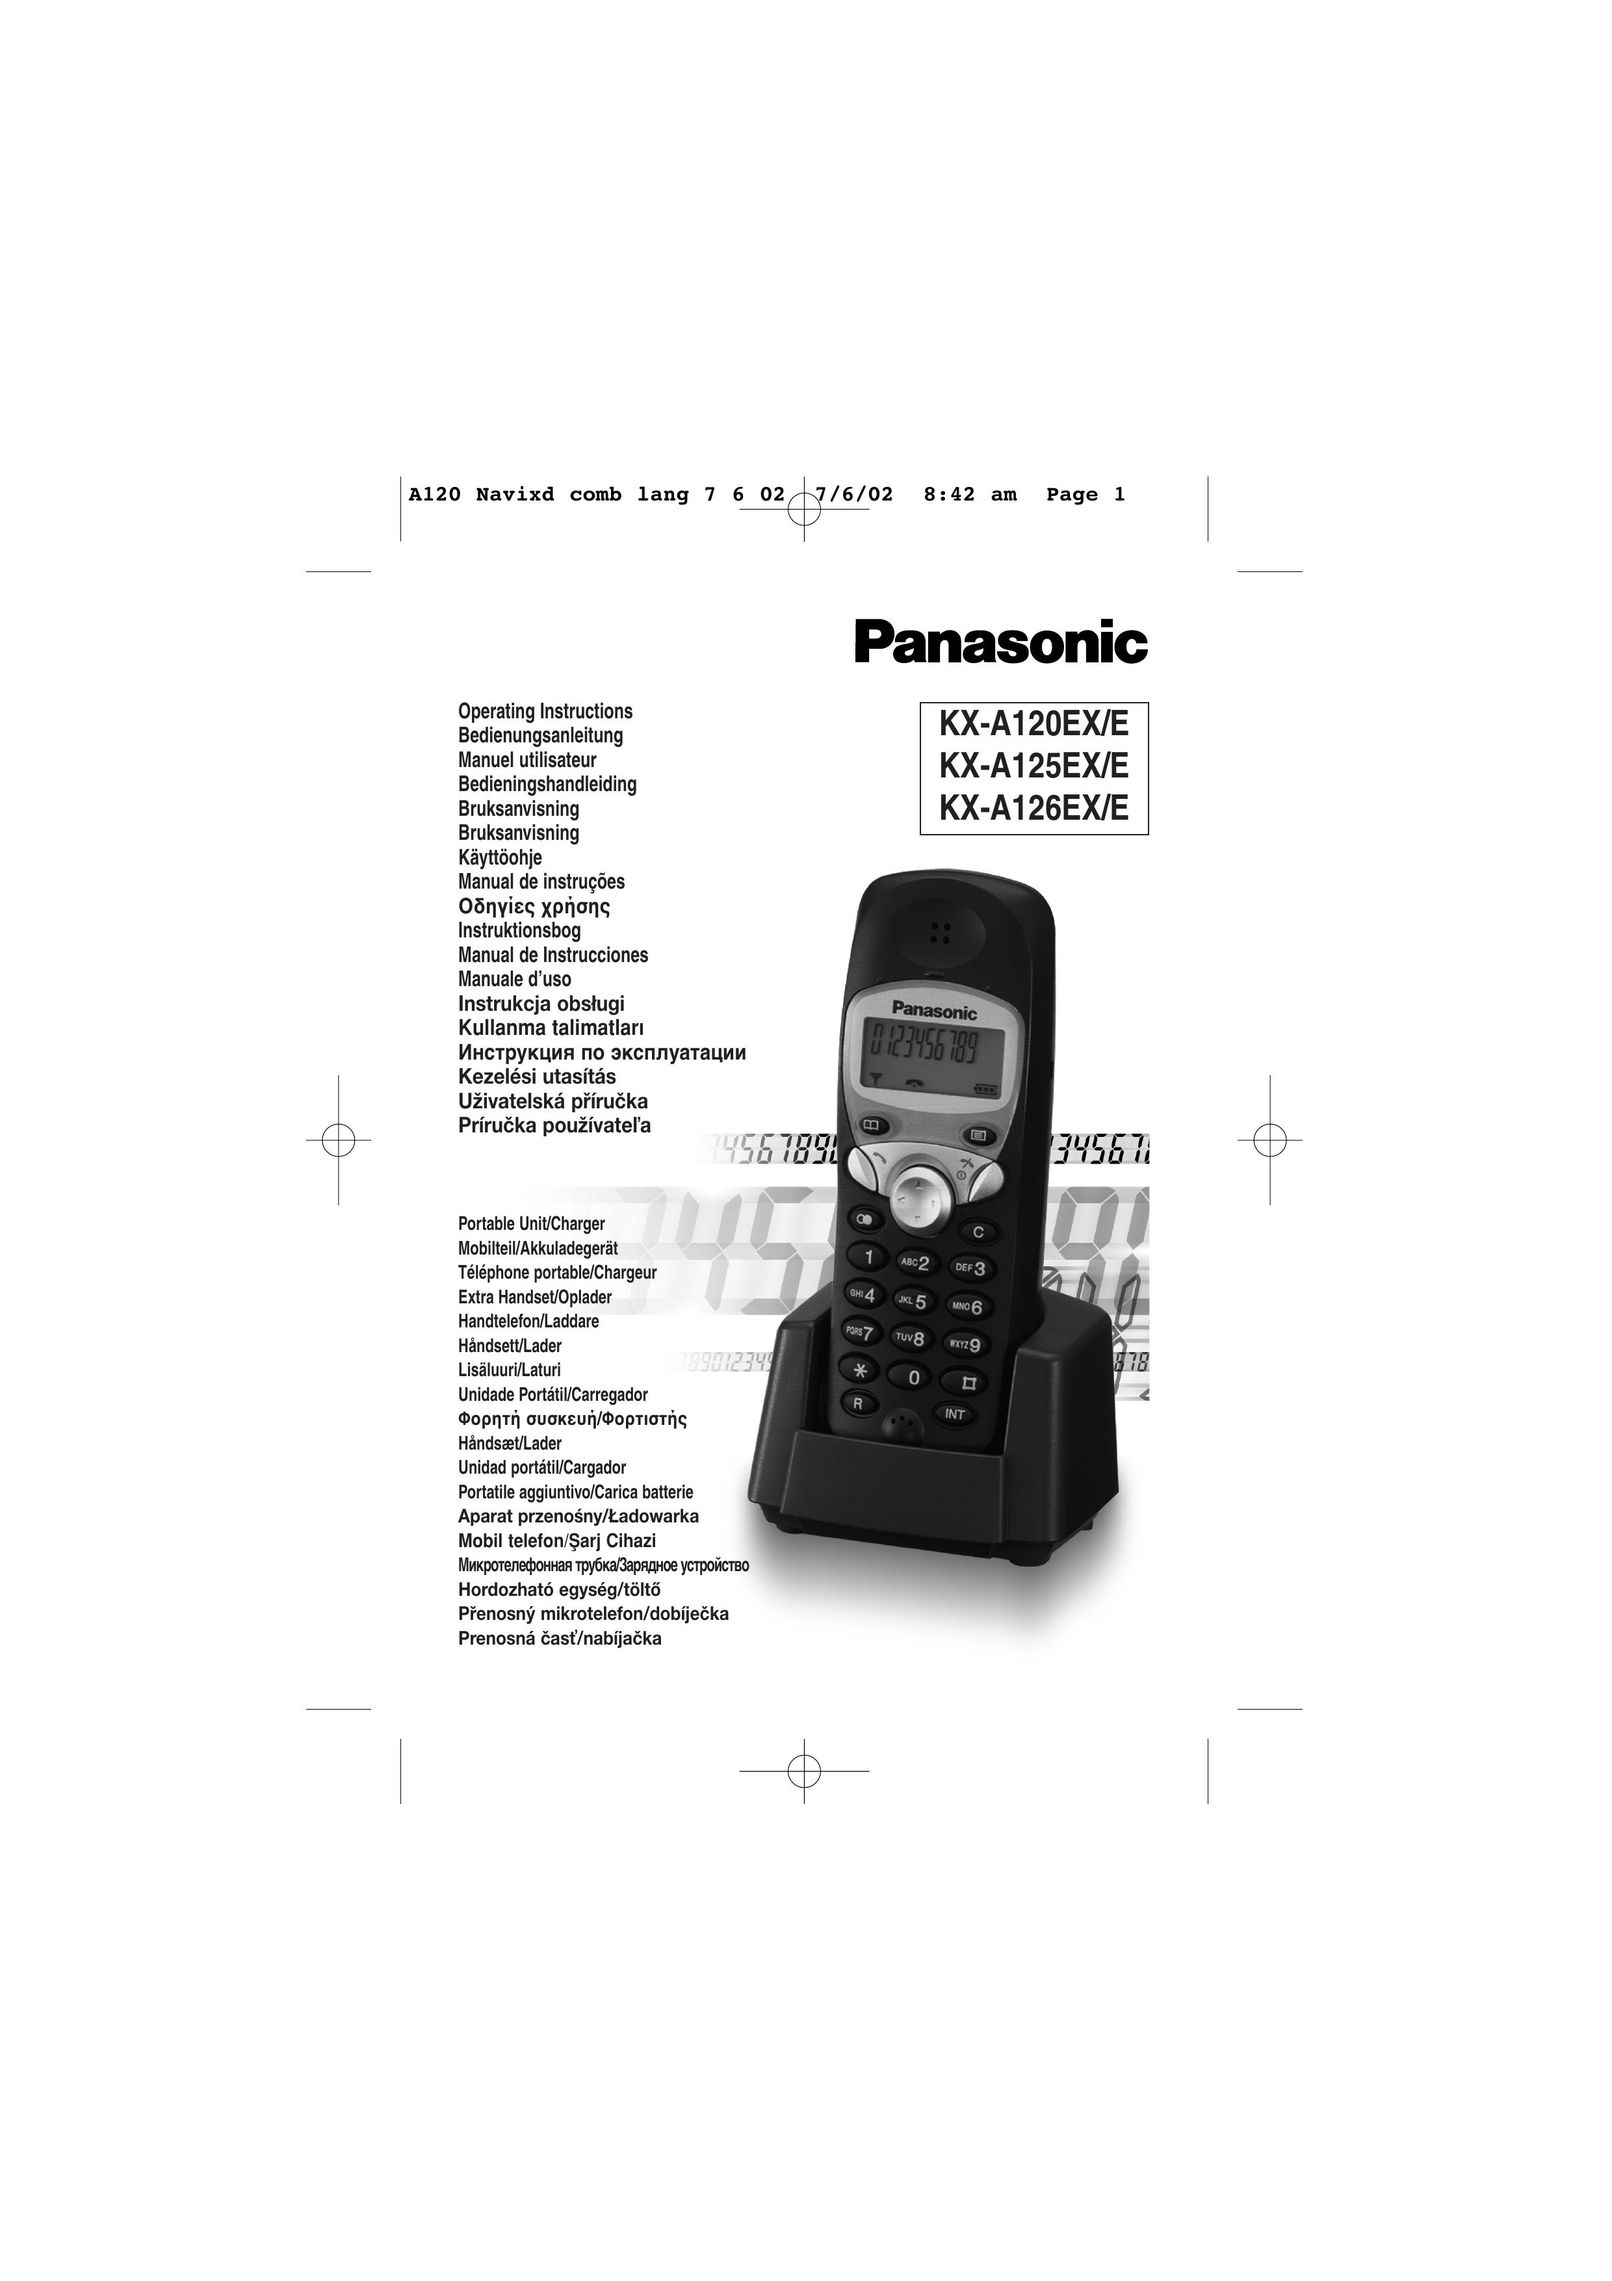 Panasonic KX-A120EX/E Telephone User Manual